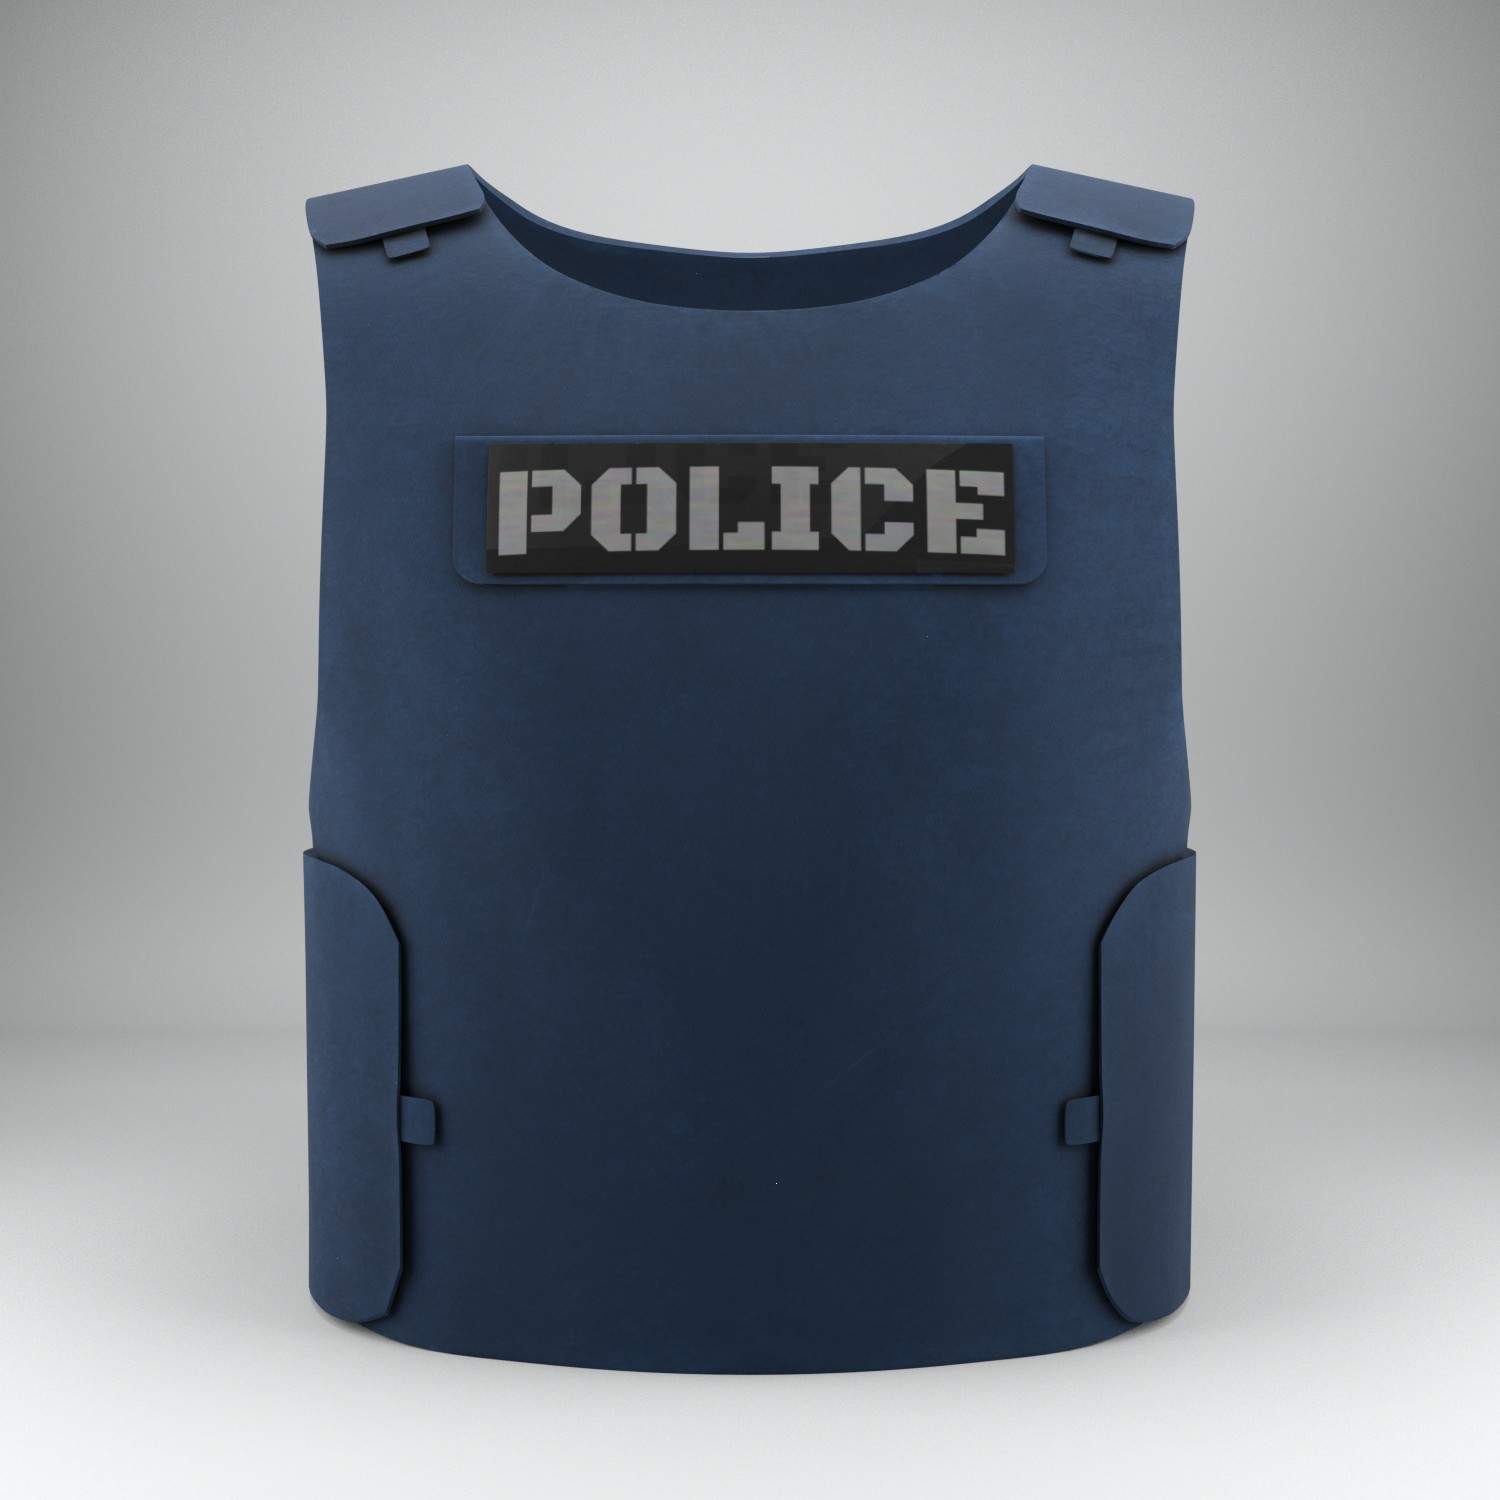 Police Flak Jacket Proof Vest 3D Model